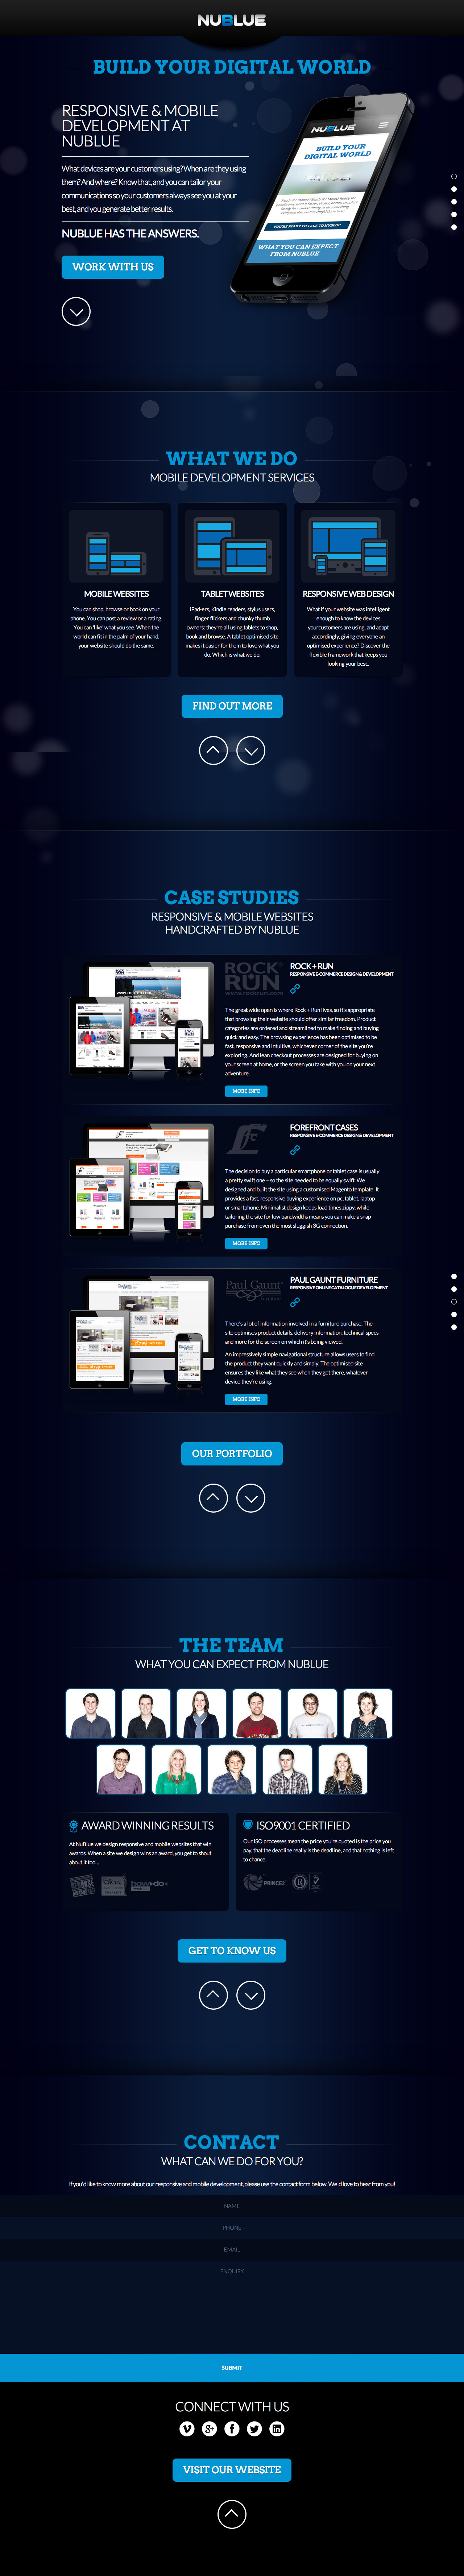 NuBlue Mobile Web Development Website Screenshot